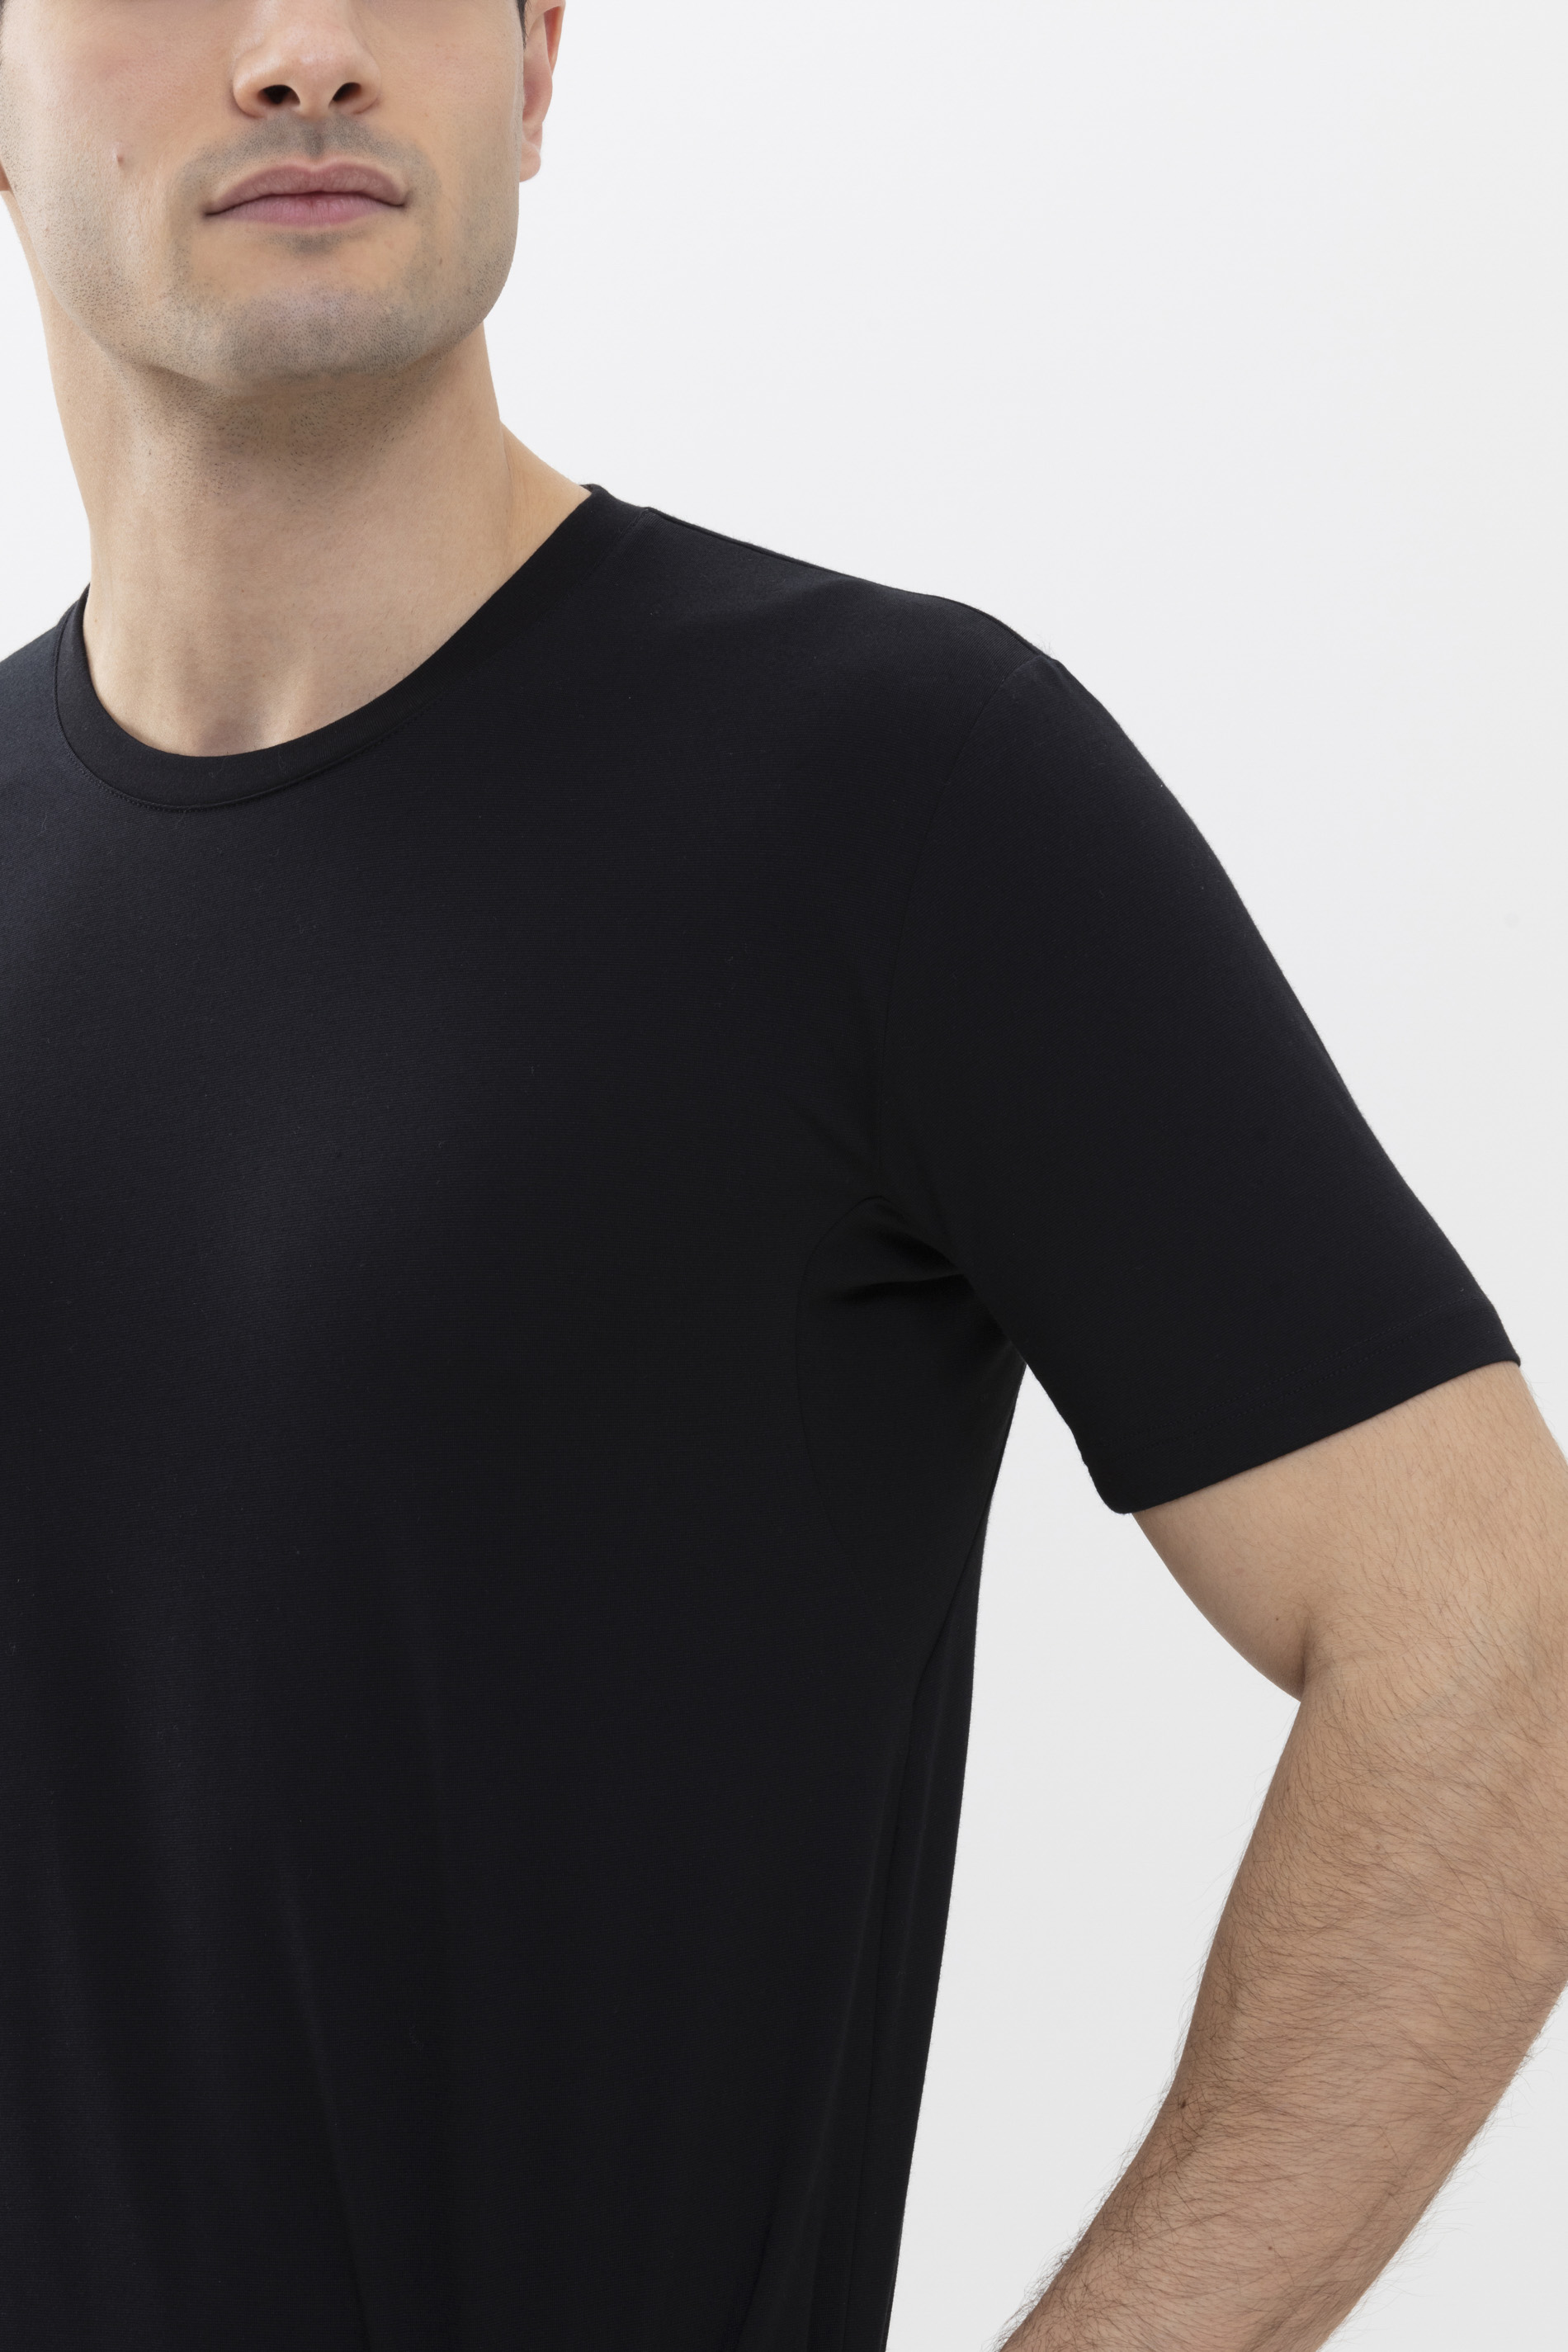 Hybrid T-shirt Black Serie Hybrid T-Shirt Detail View 02 | mey®